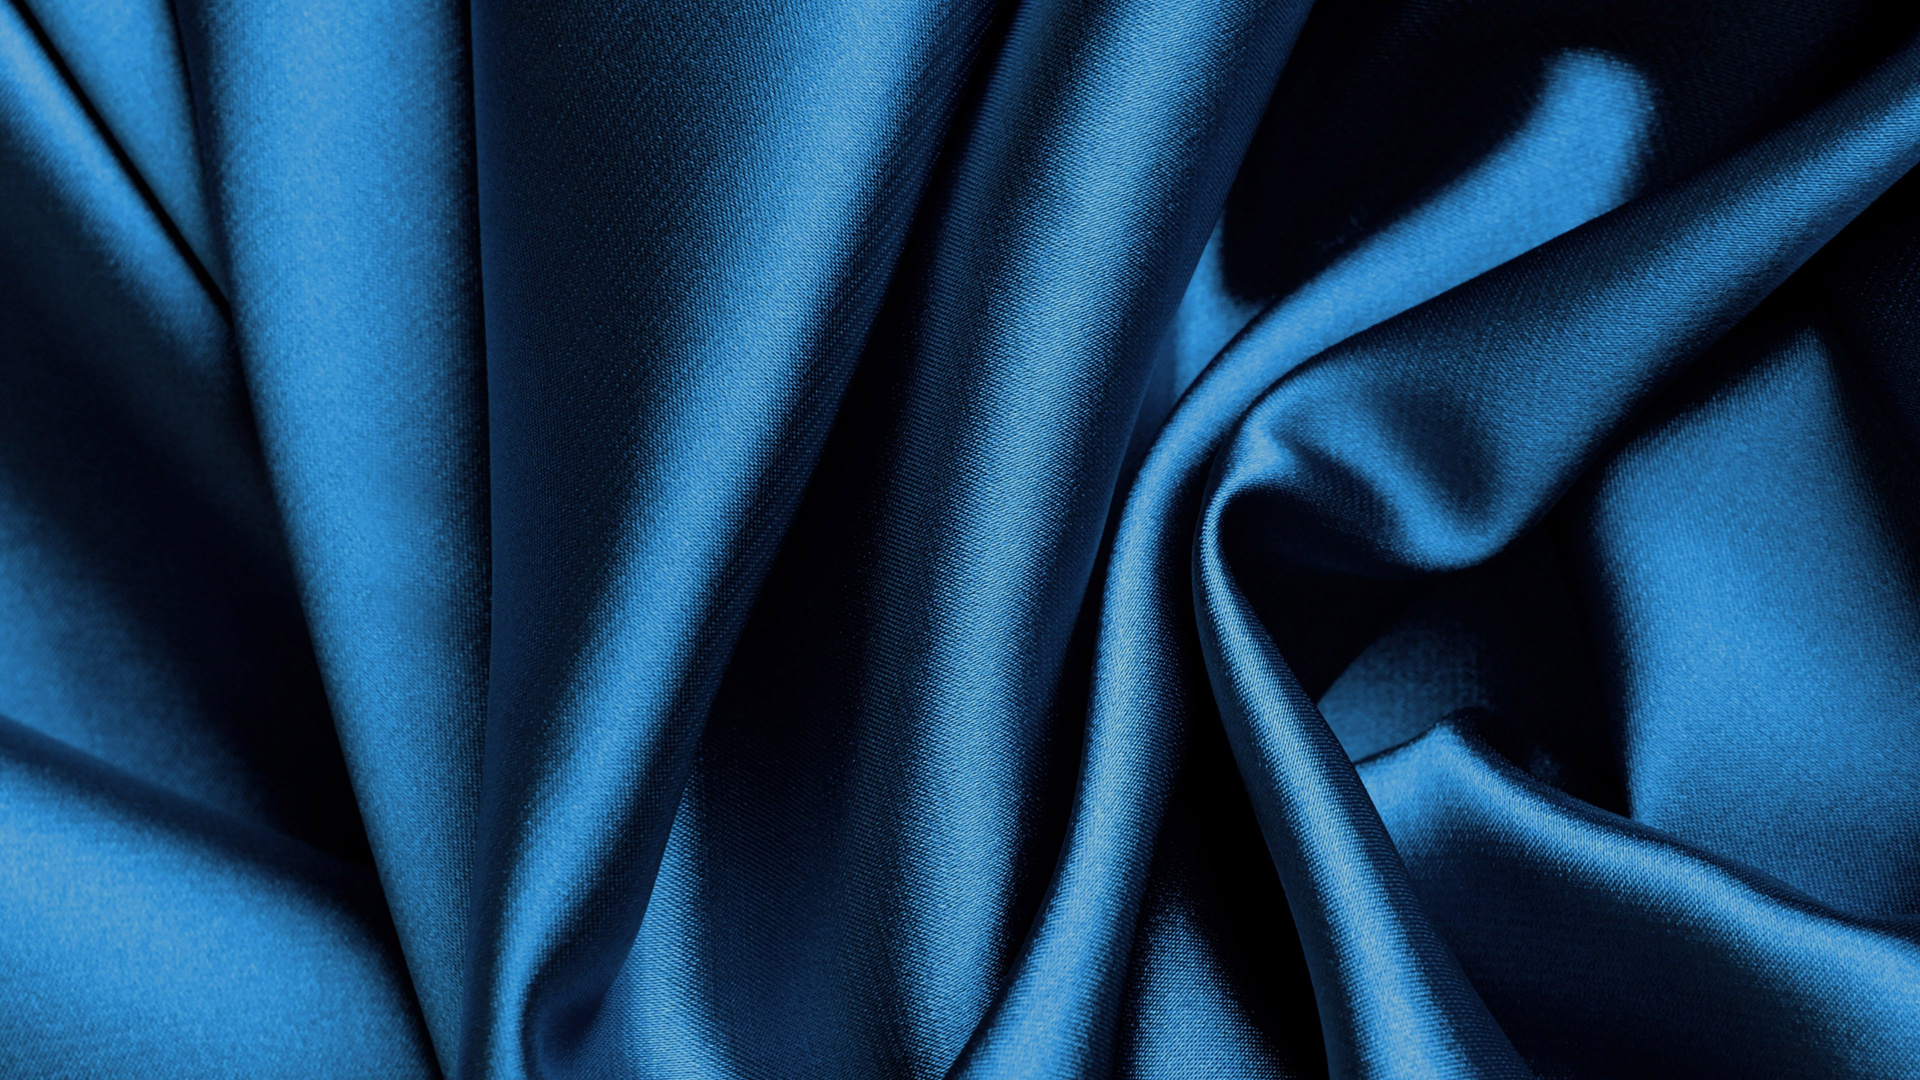 Textil Azul en Fotografía de Cerca. Wallpaper in 1920x1080 Resolution